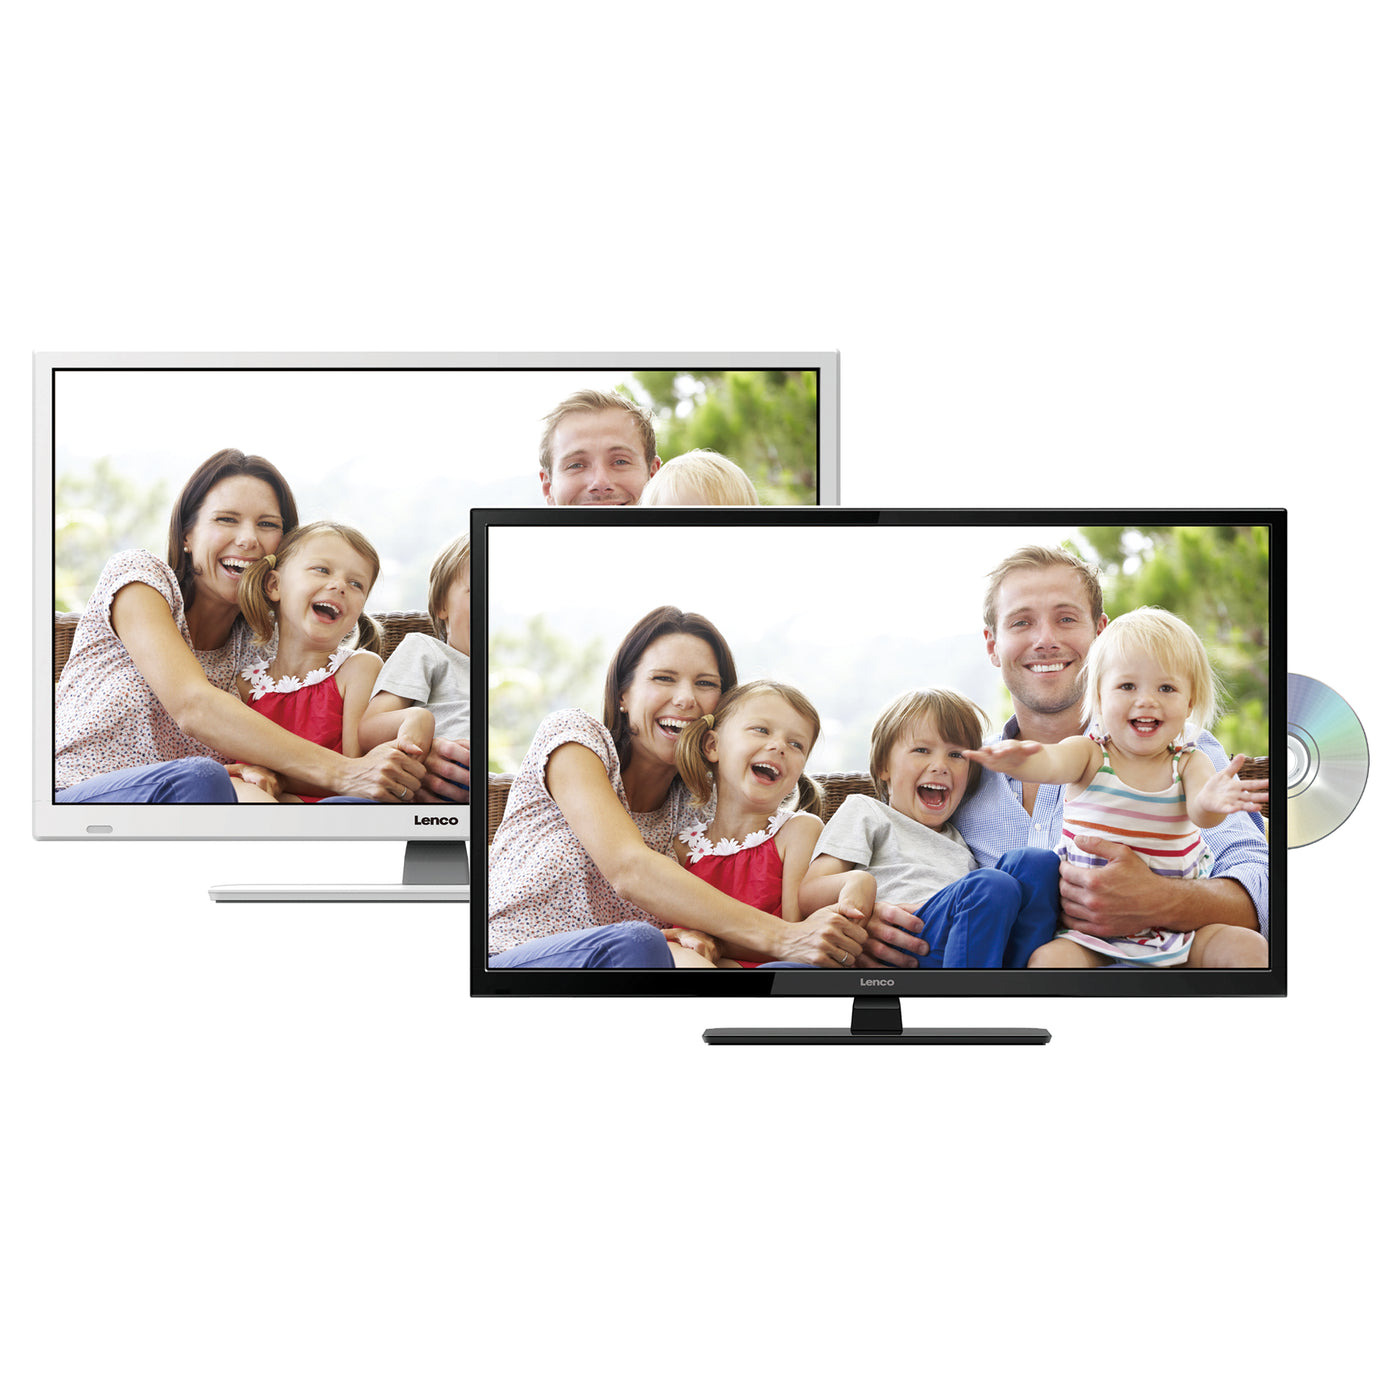 LENCO DVL-2862 - HD LED TV with 28 inch and DVB/T/T2/S2/C with integrated DVD player - Black